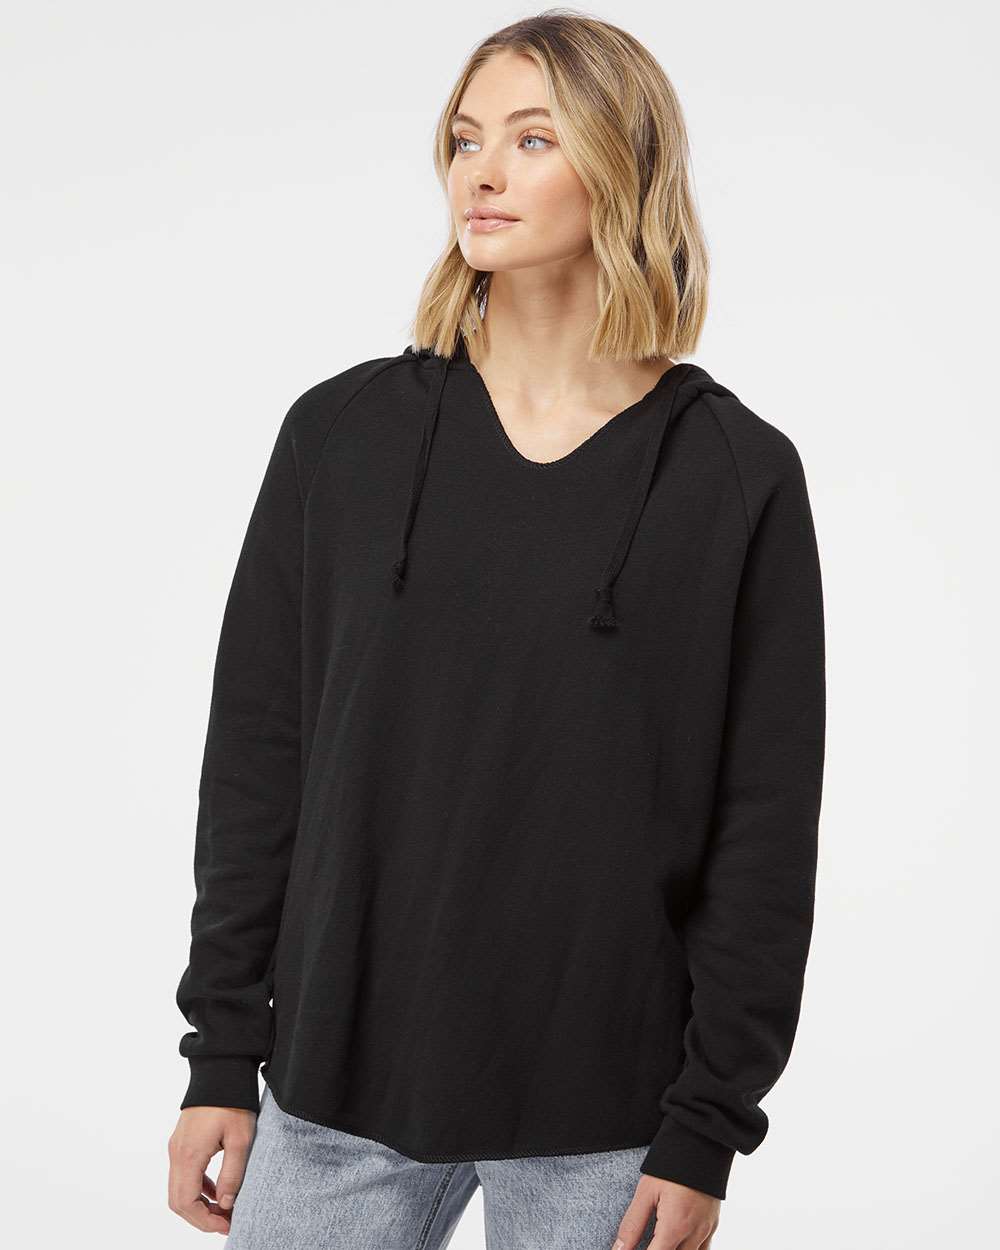 LOBOS RUSH SOCCER | Women’s Lightweight Wave Wash Hooded Sweatshirt - BLACK